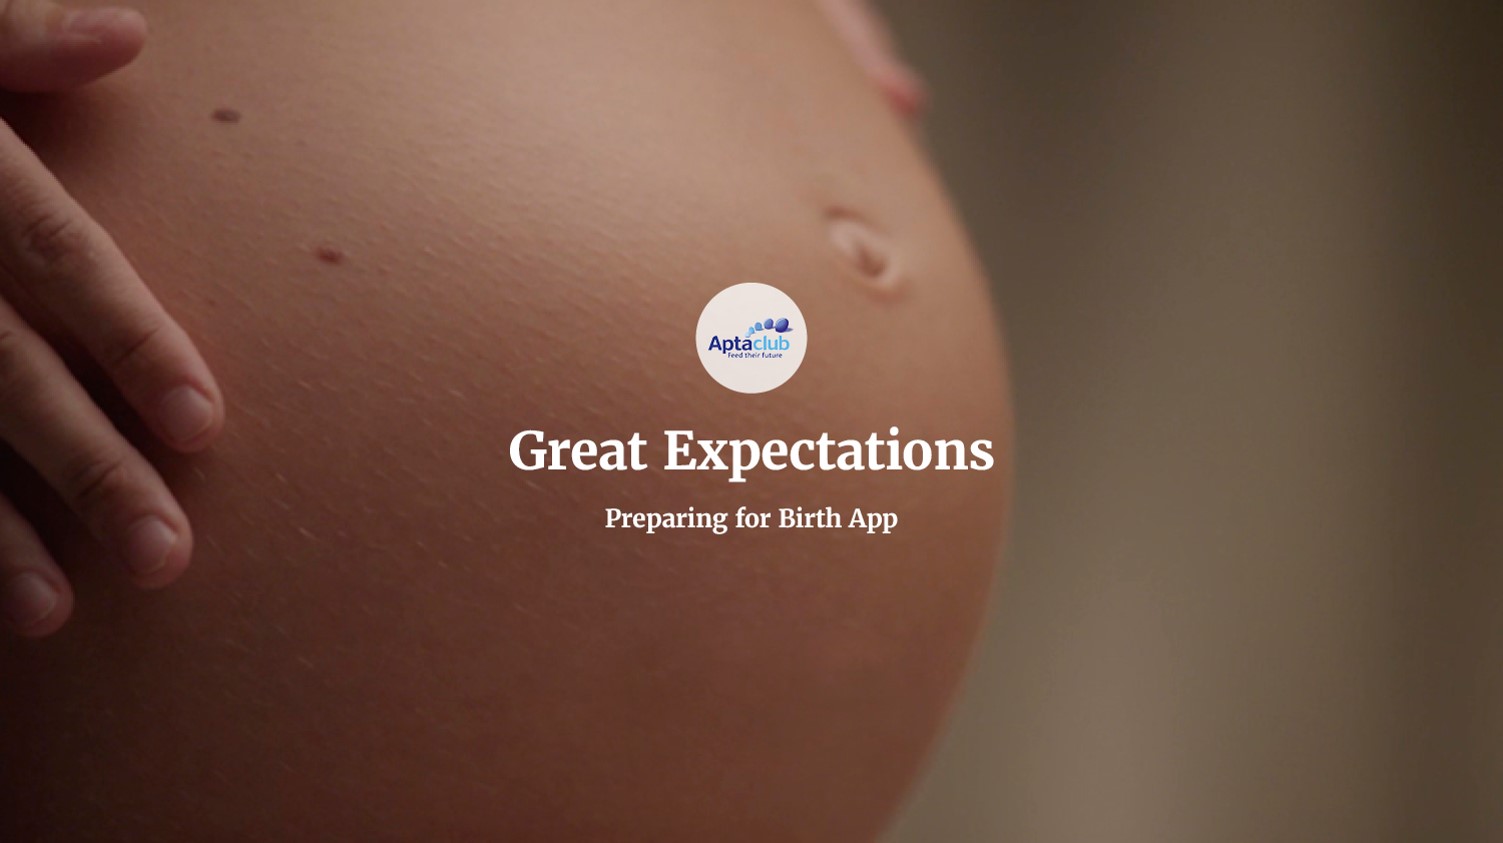 Danone model – Preparing for Birth 2